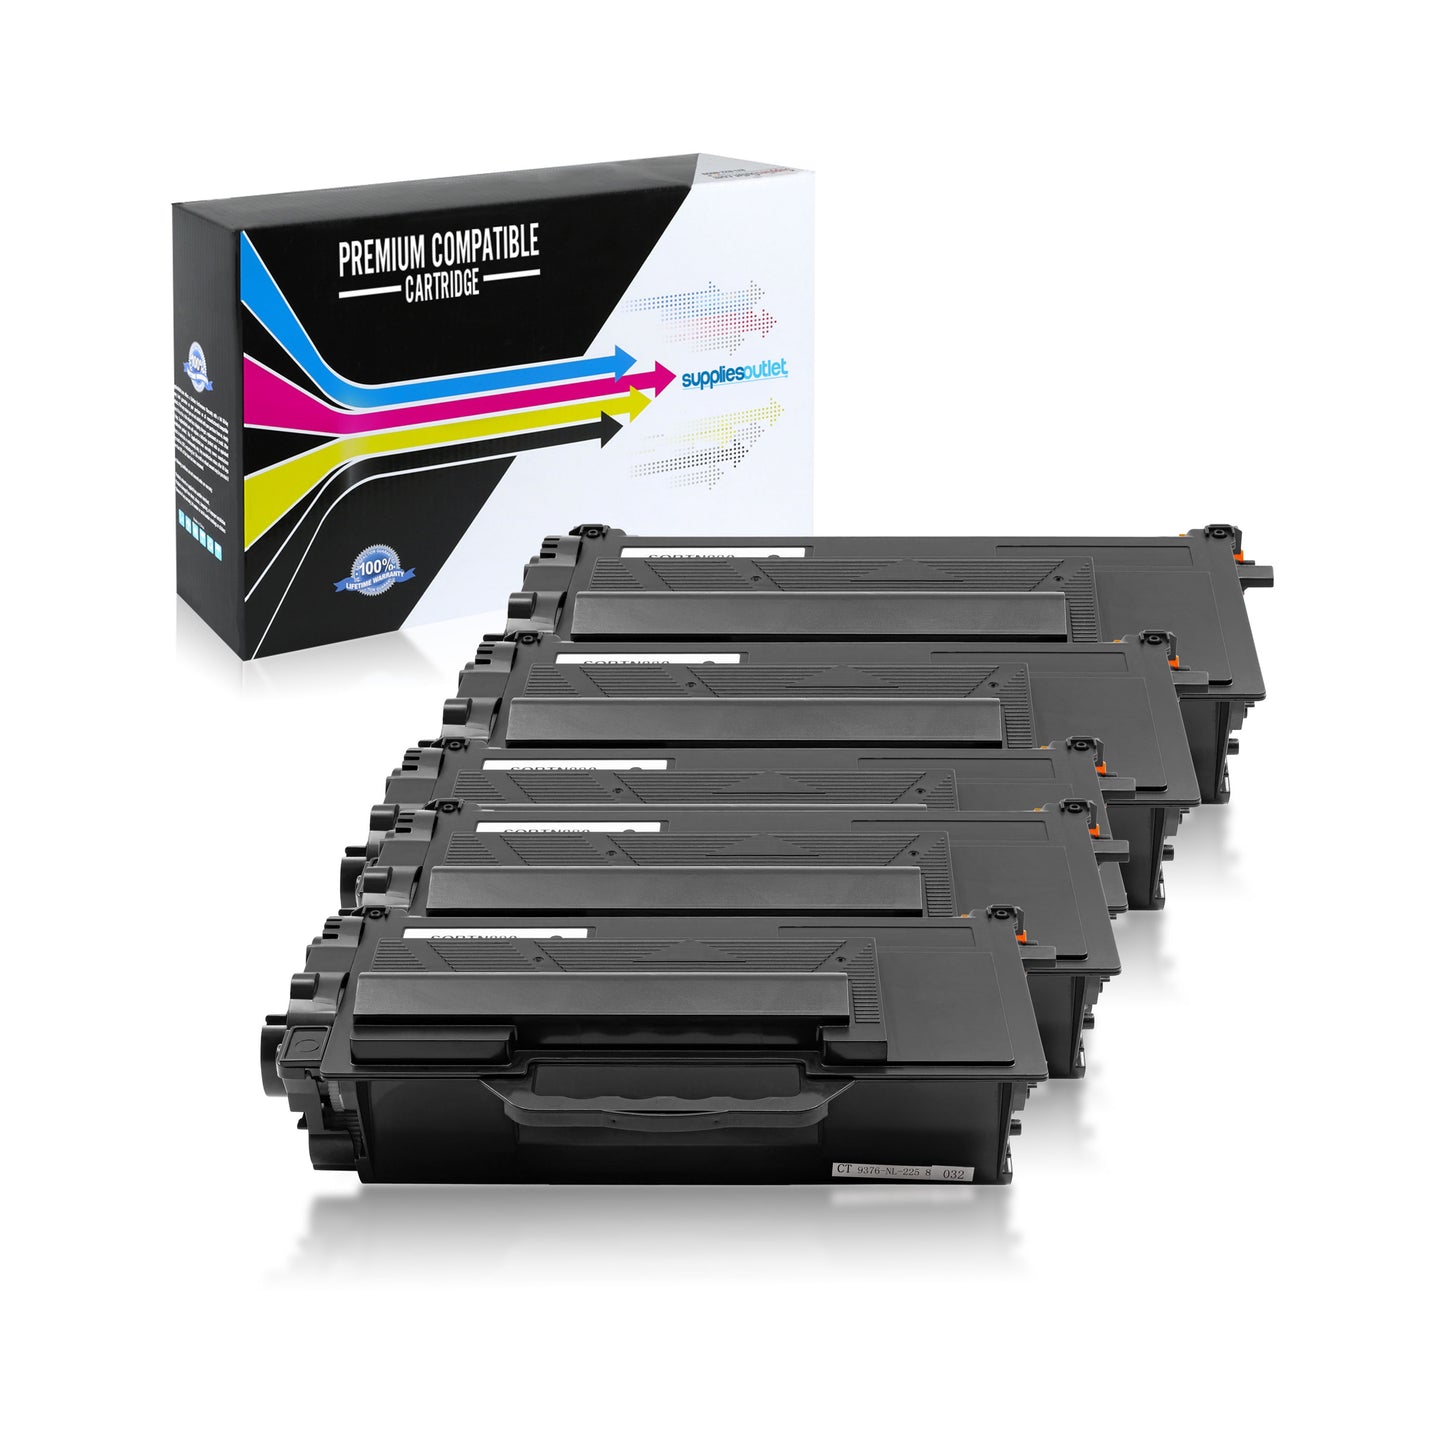 Compatible Brother TN880 Black Toner Cartridge Jumbo - 12,000 Page Yield